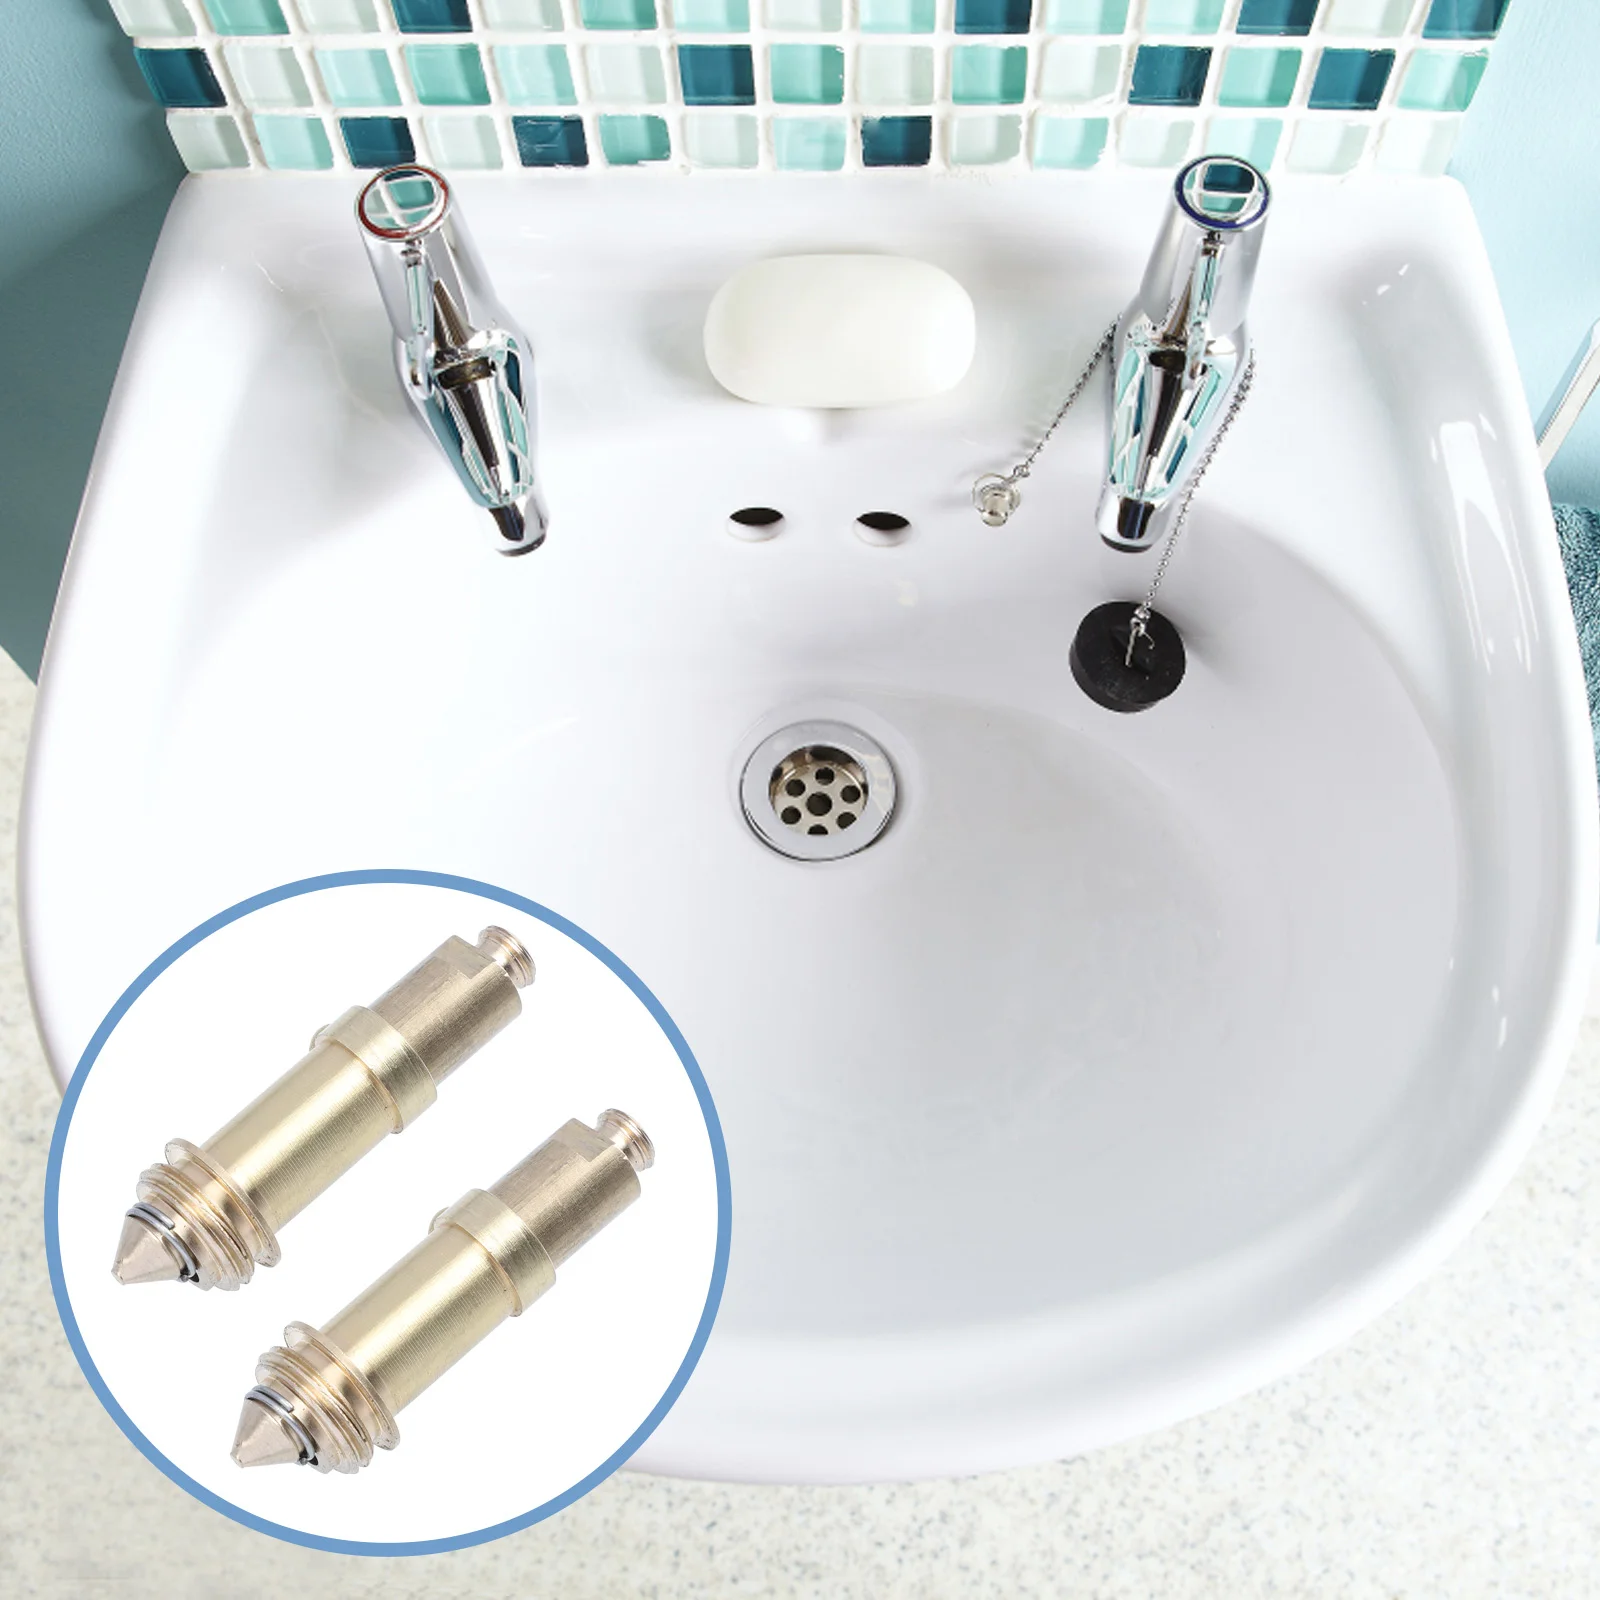 

Brass Bounce Movement Tub Drain Stopper Accessories Basin Clicker Bolt Clack Plug Pop-up Repair Parts Push Spring Bath Sink